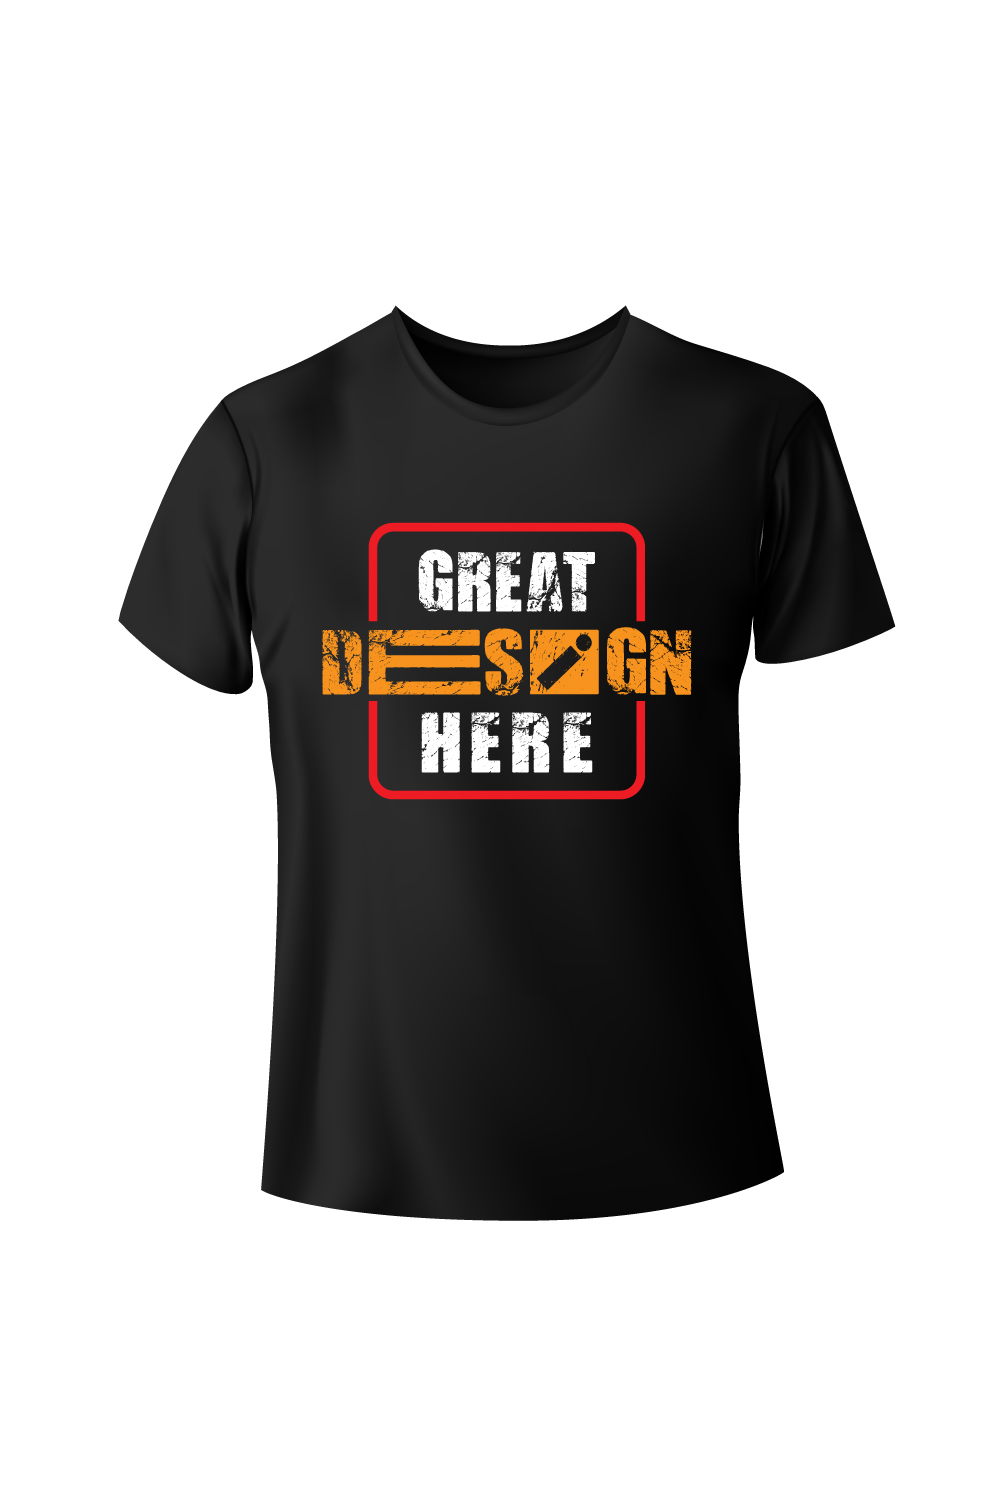 Professional T-shirt design pinterest preview image.